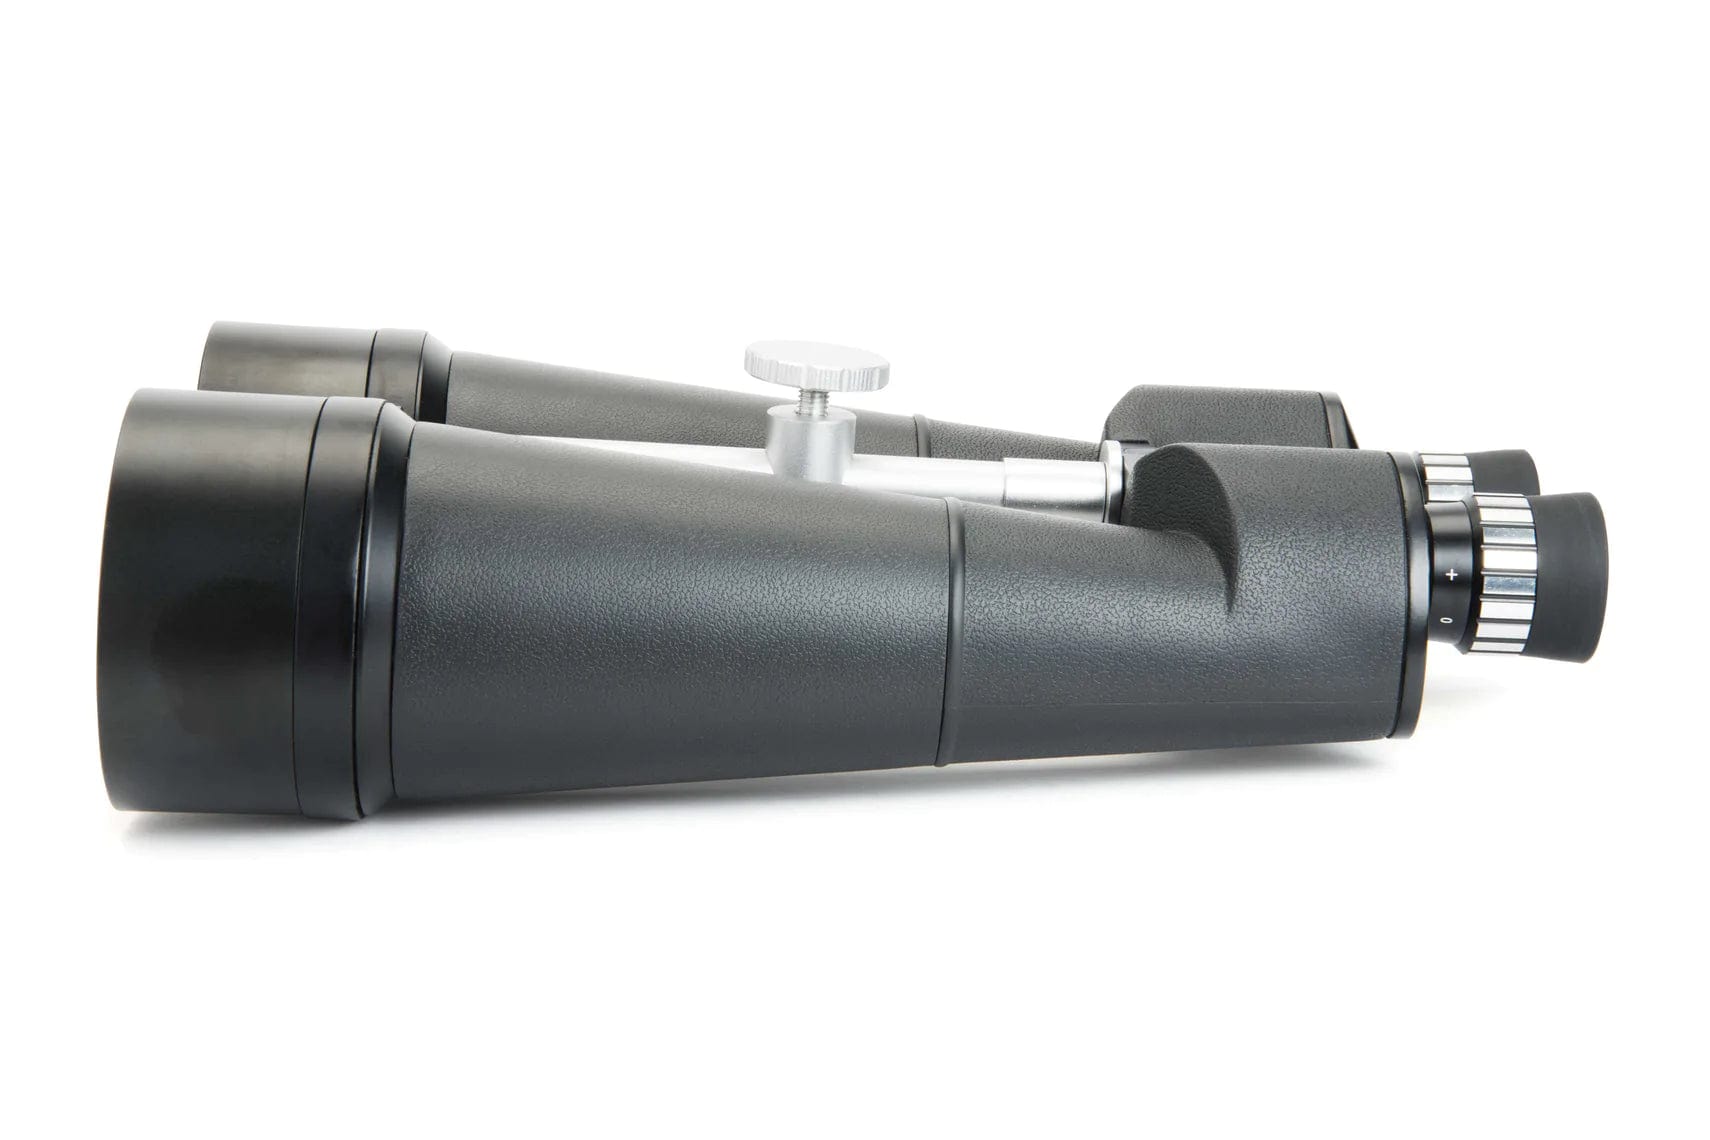 Celestron Accessory Celestron SkyMaster 25x100mm Porro Binoculars - 71017